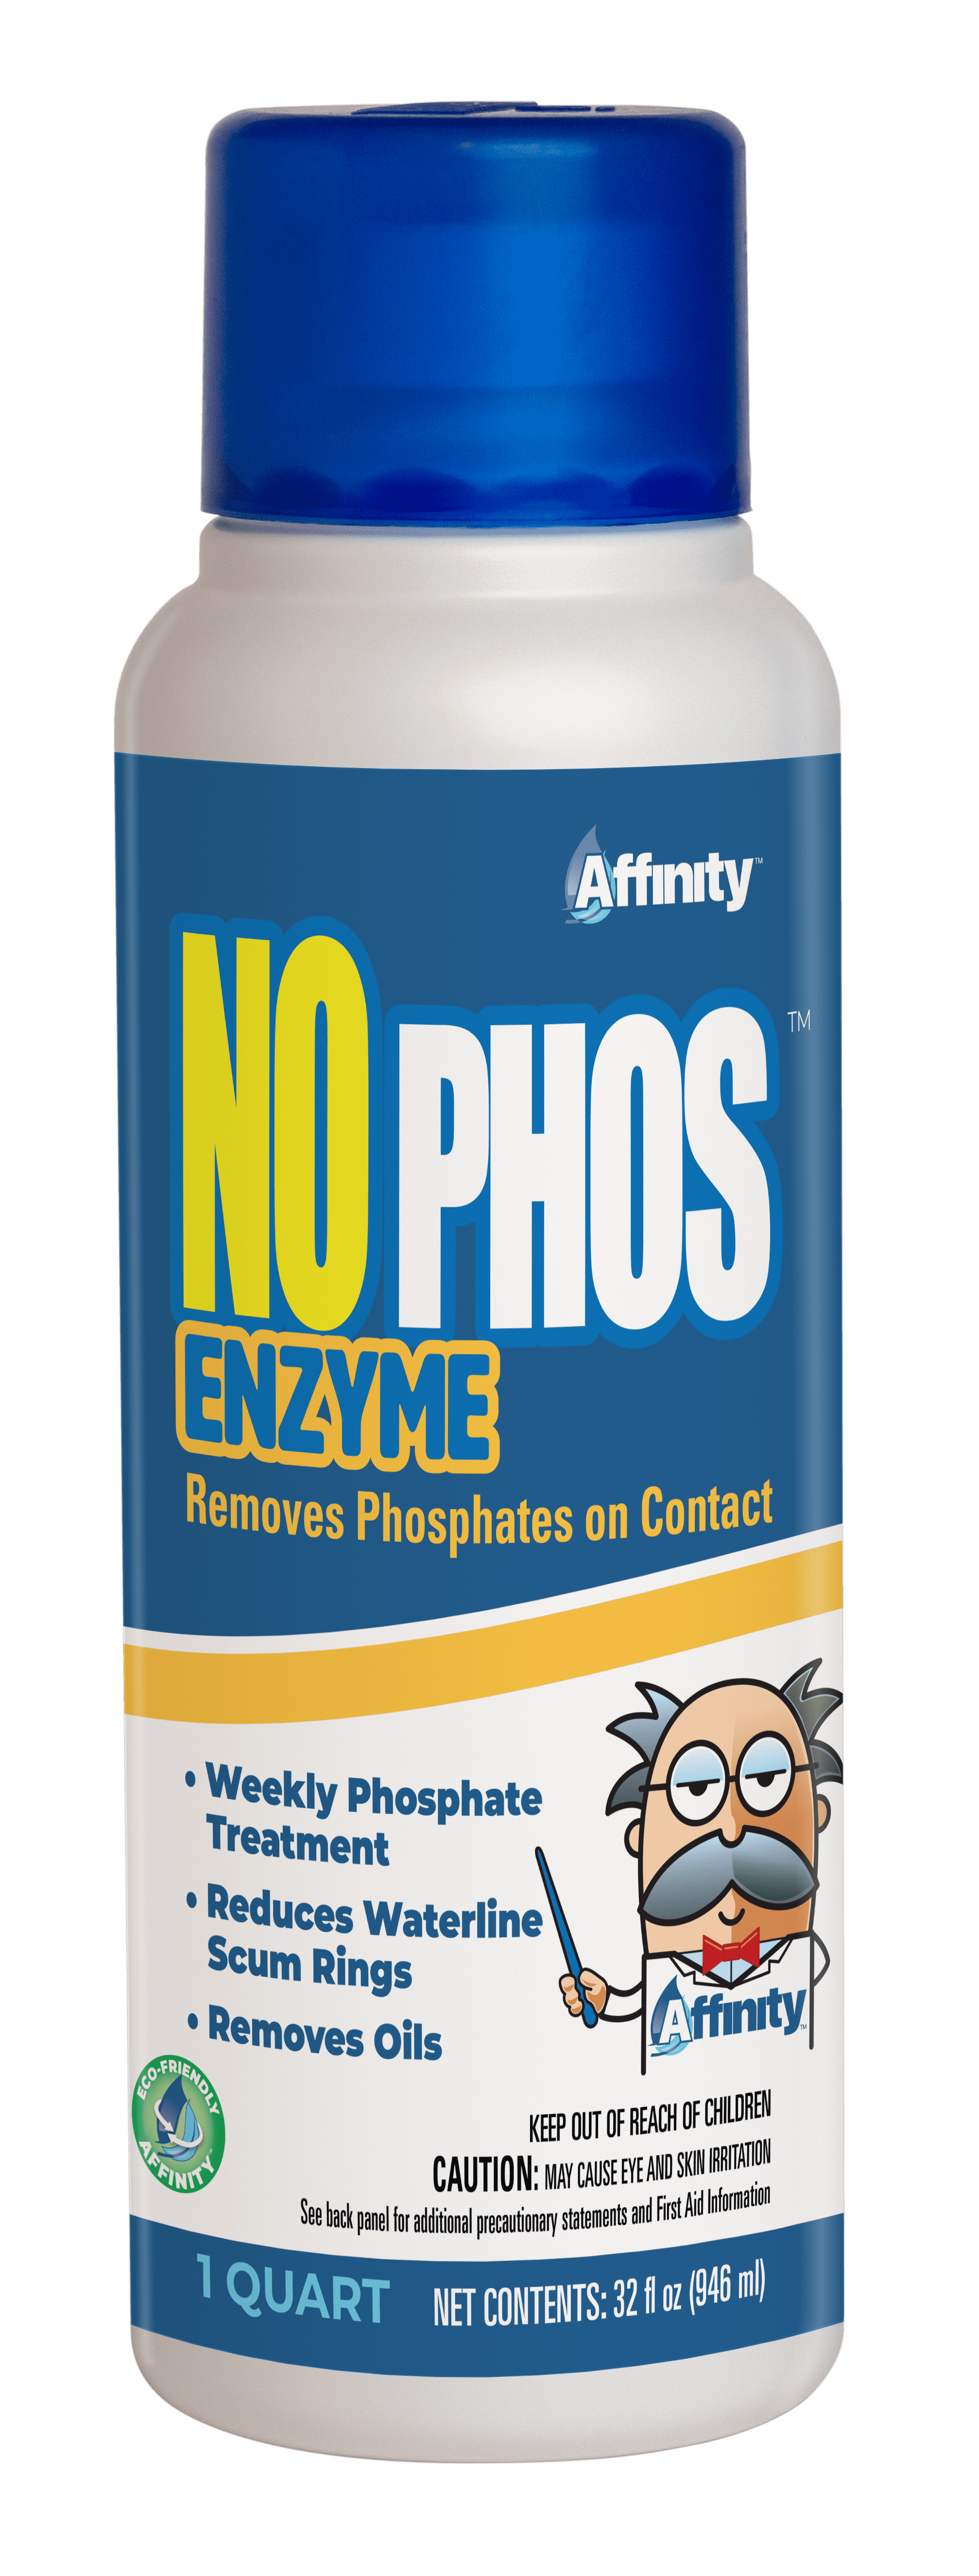 Affinity No Phos Enzyme